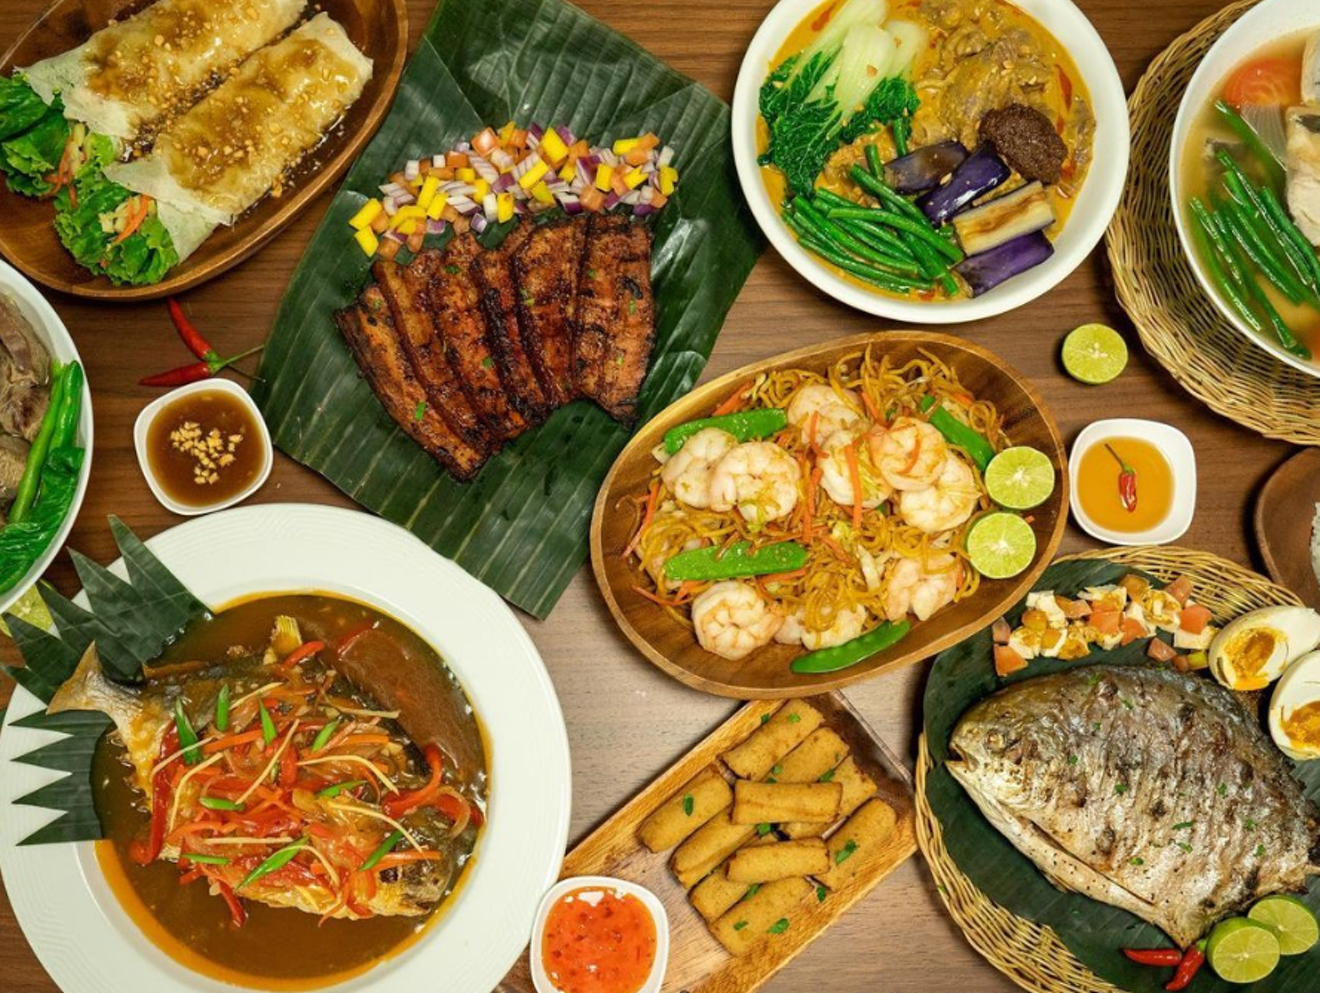 Aurora restaurant Manila Bay is offering an exclusive Asian Food Week menu.